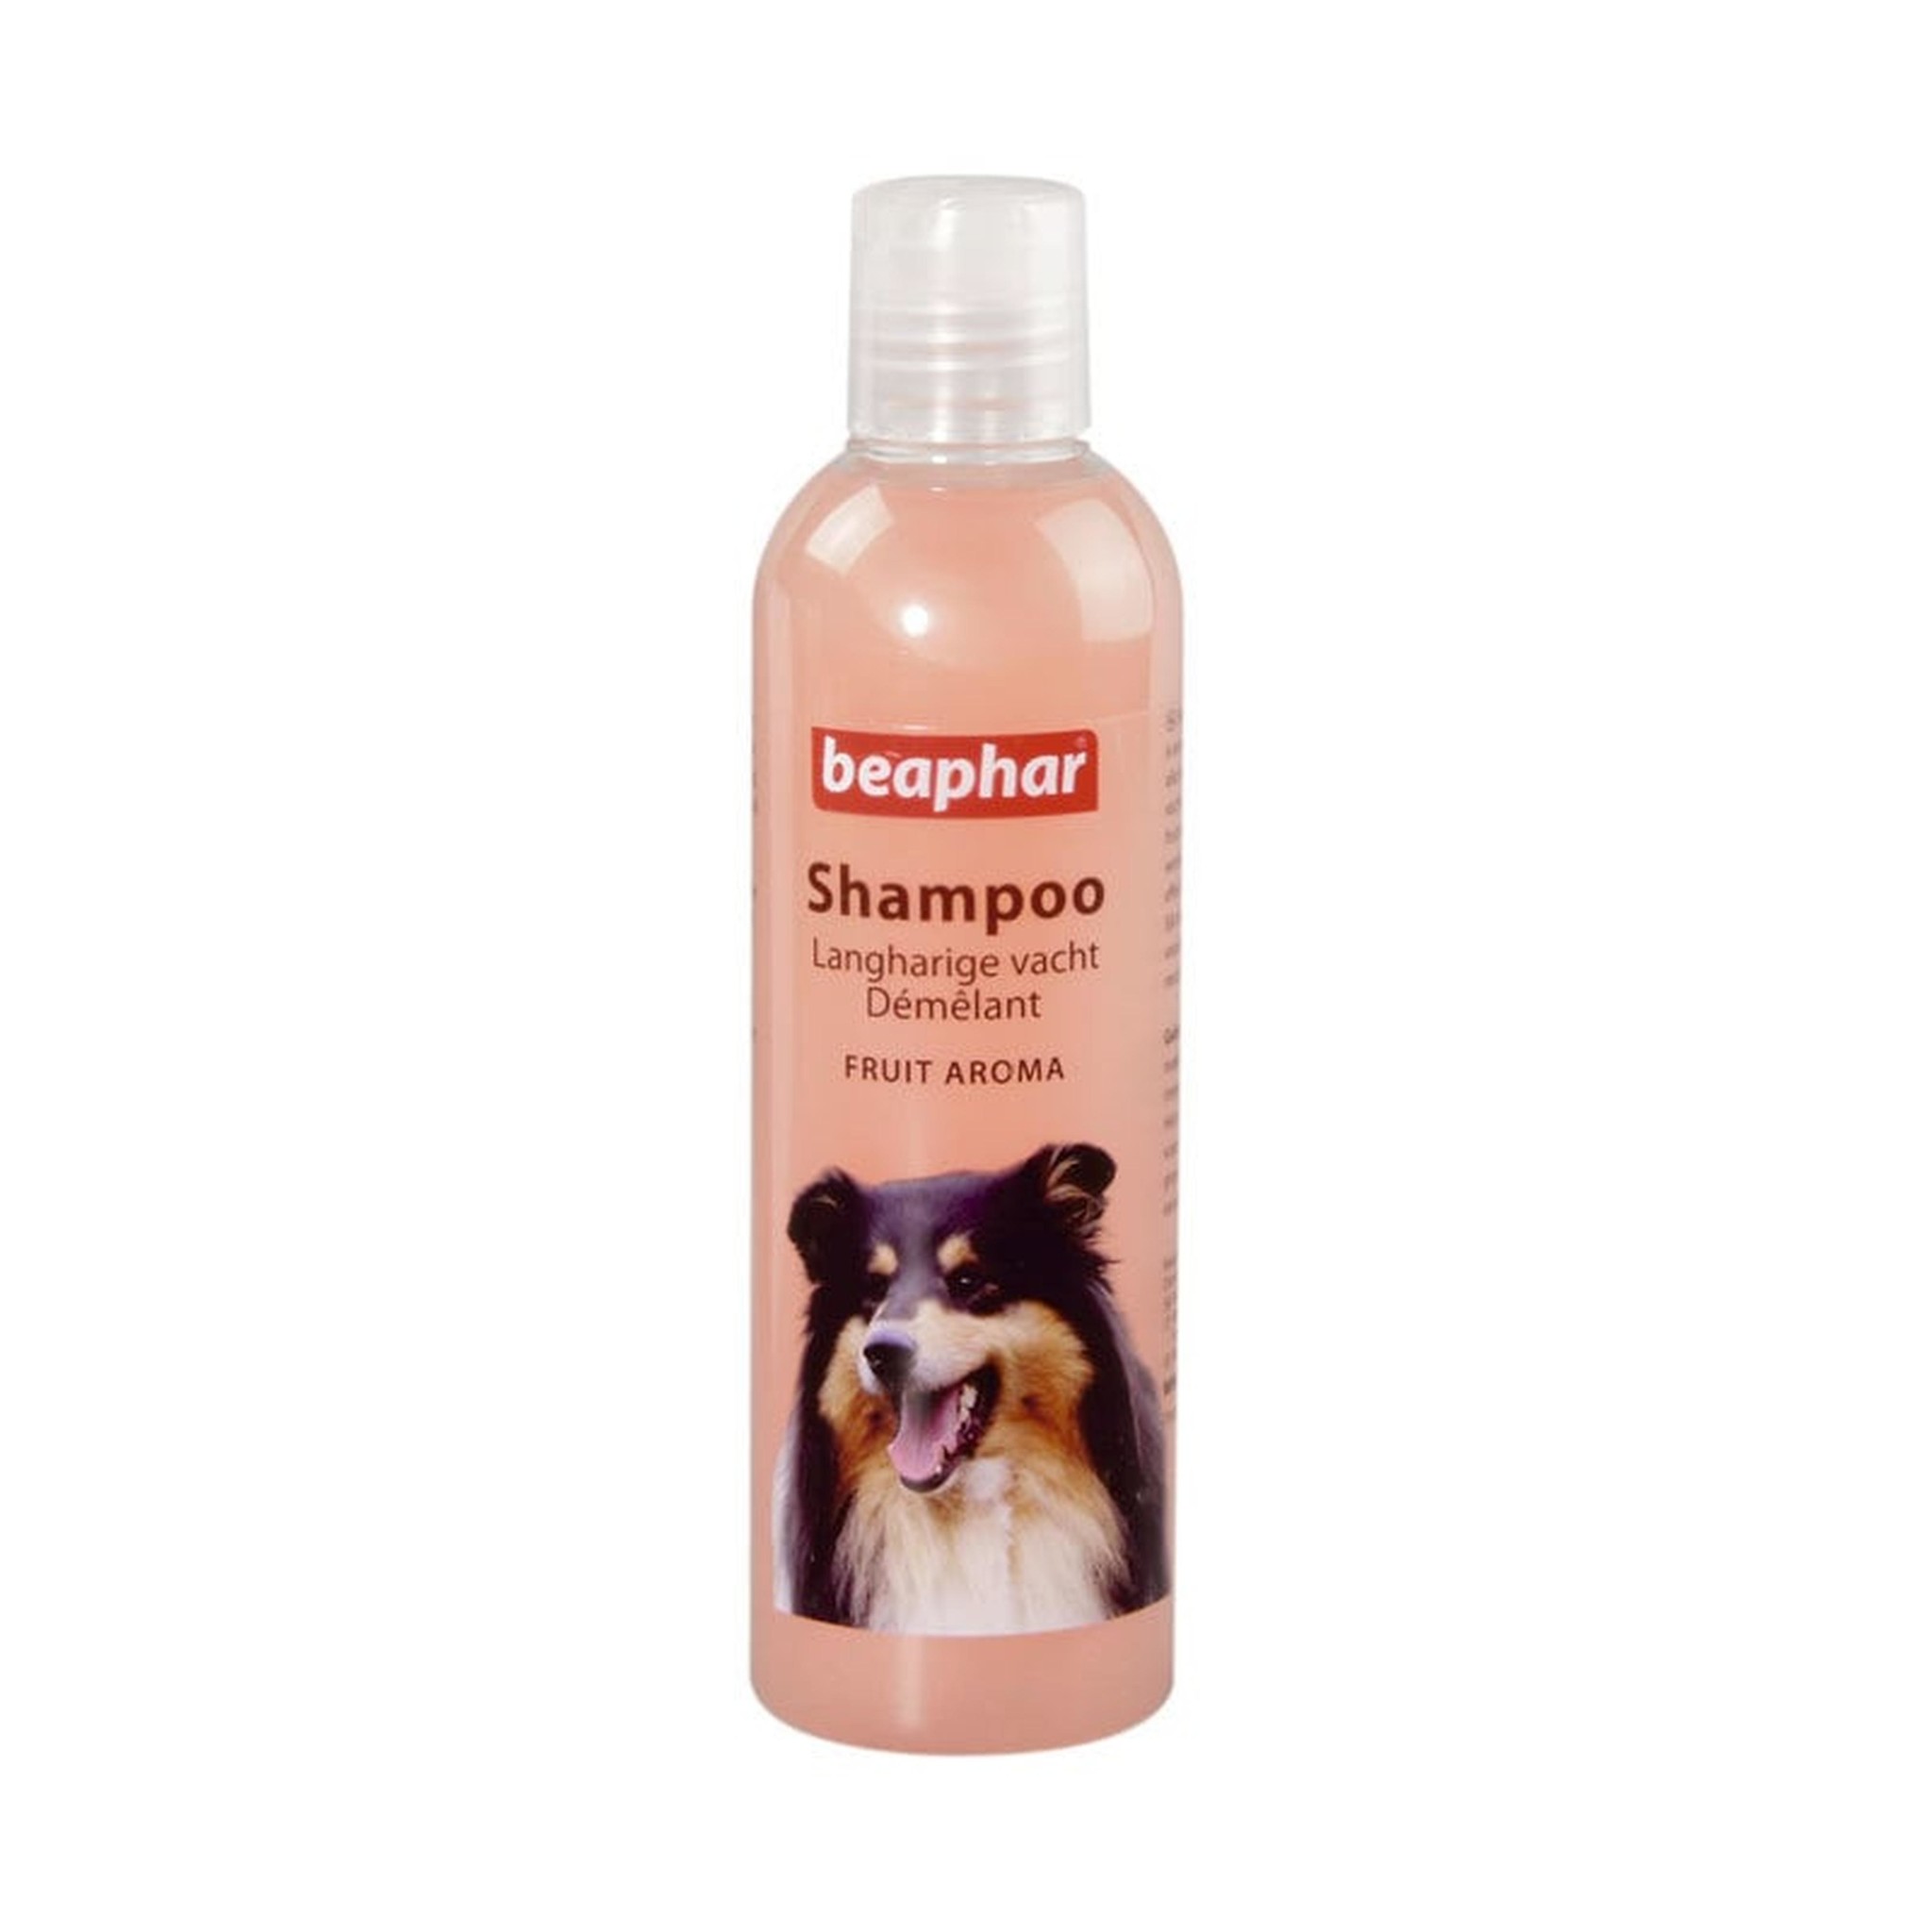 rooster Sportschool paar Beaphar Shampoo langharige vacht 250 ml. - Beaphar hondenshampoo -  Webwinkel voor vijver, aquarium en huisdieren | Beest.nl